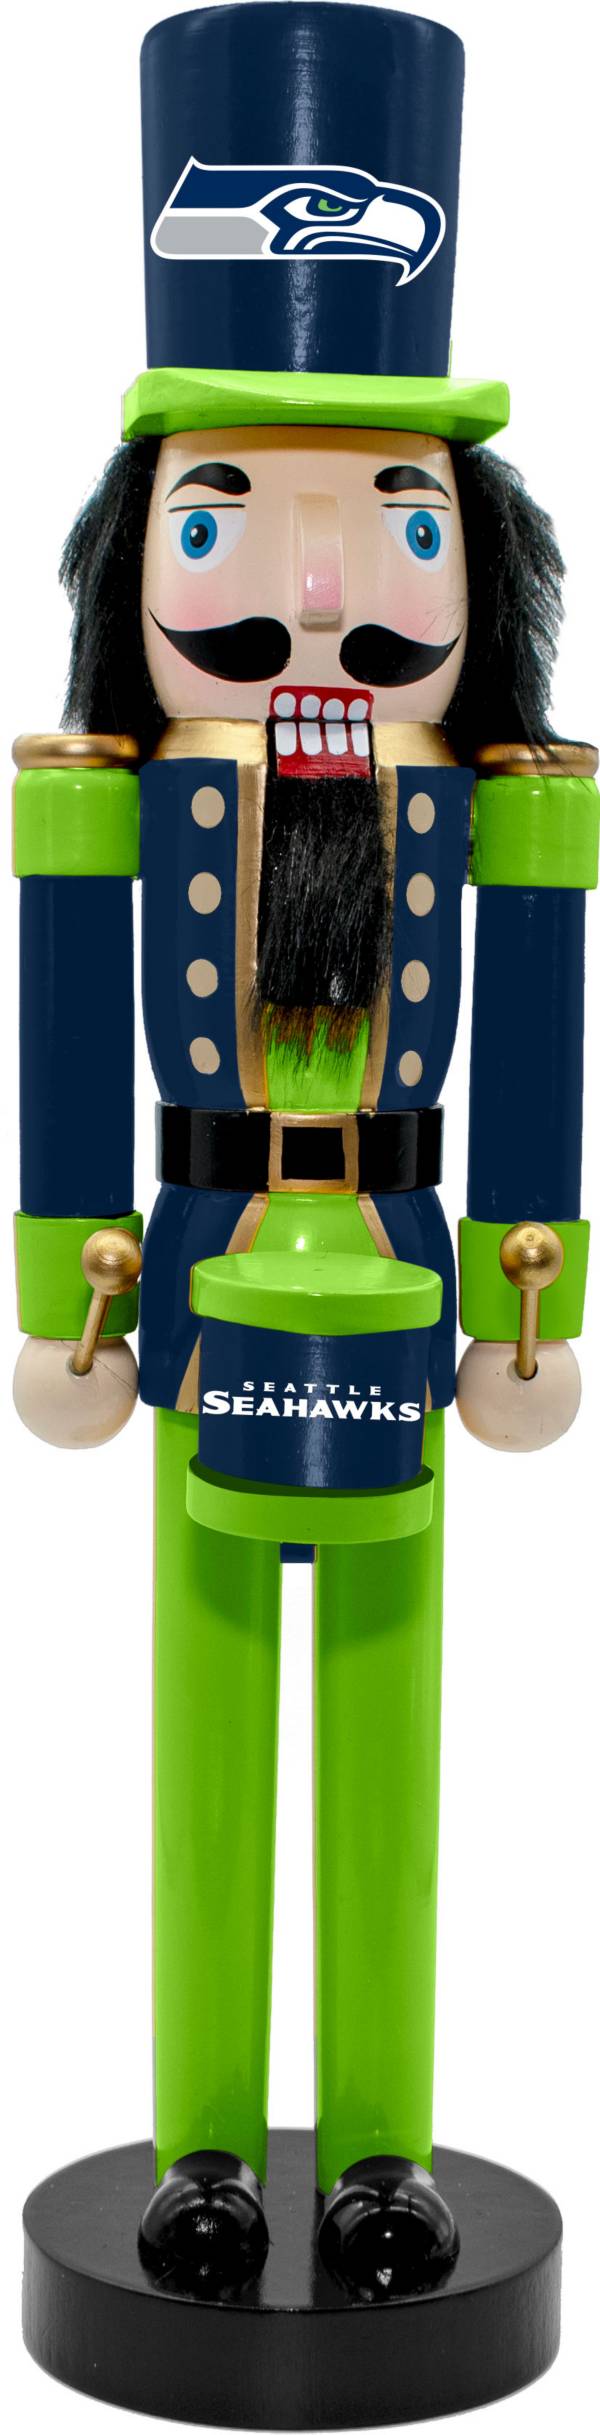 Memory Company Seattle Seahawks 14 Inch Nutcracker product image